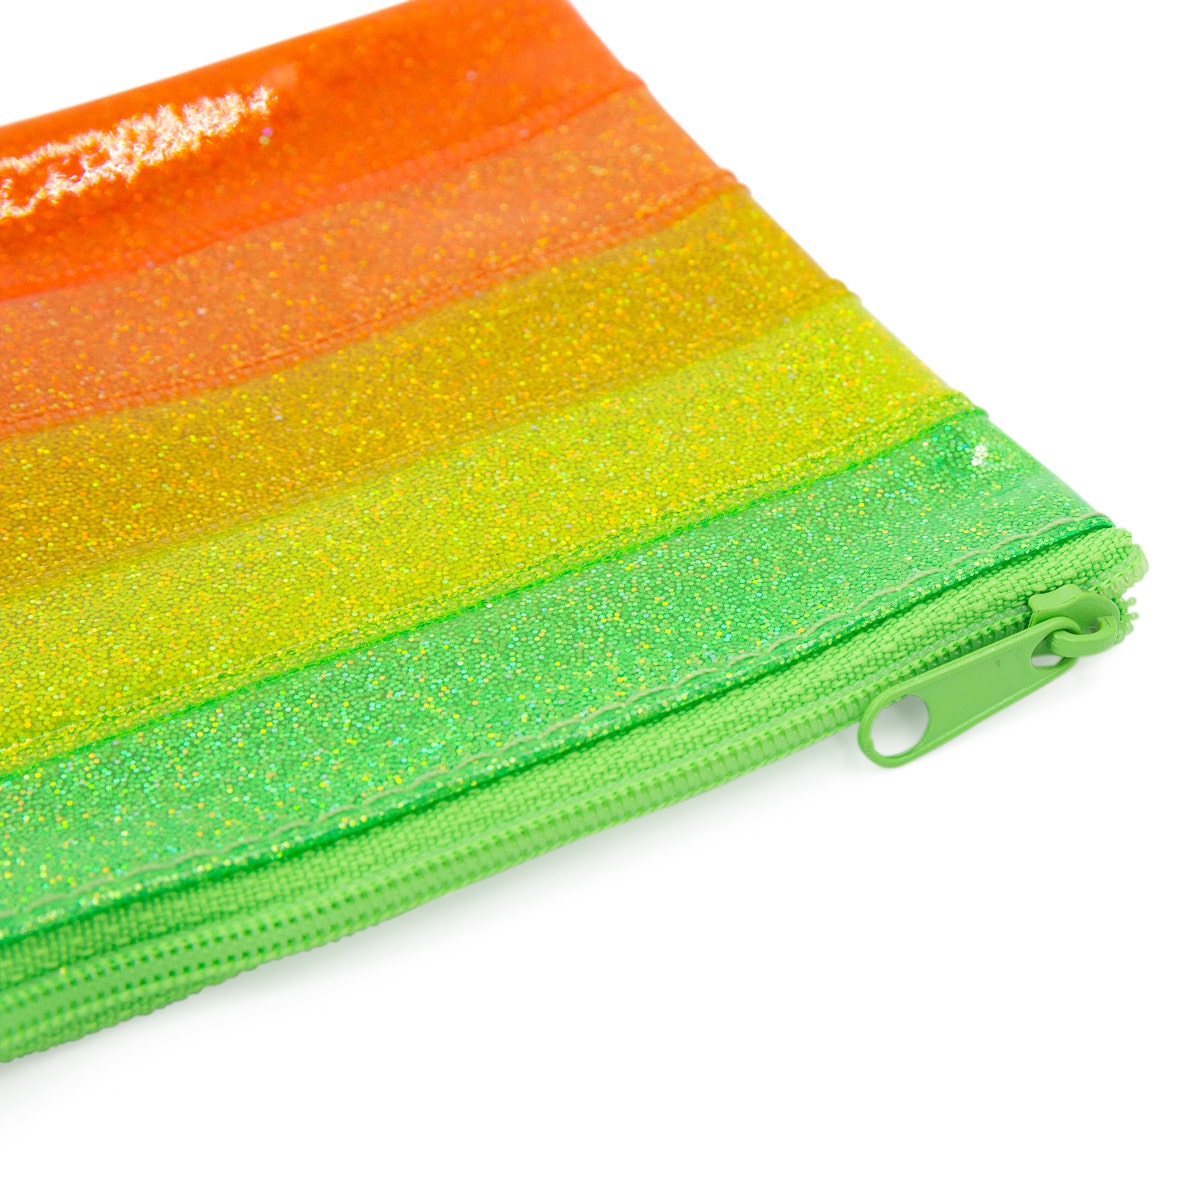 Zipper Pouch Storage For Pens, School Supplies – Glitter Colors!